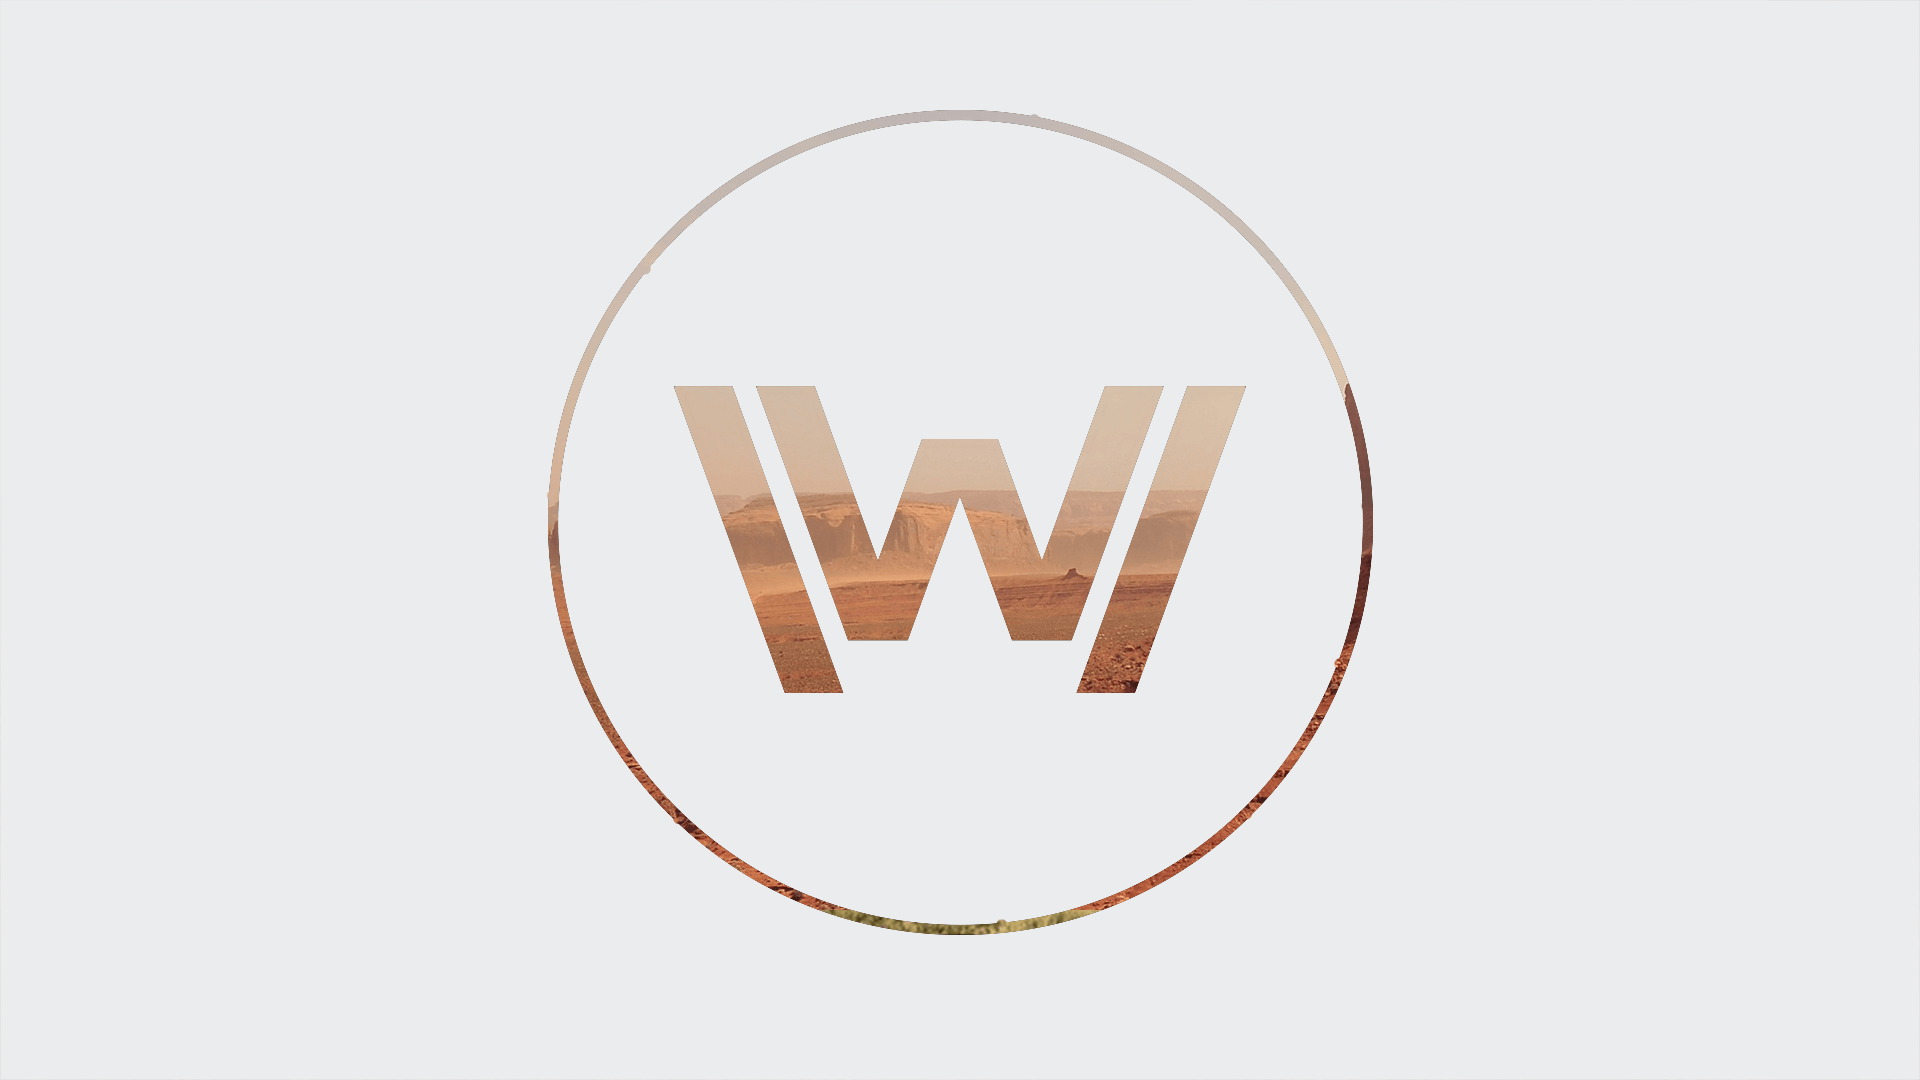 Westworld logo wallpaper. Computer wallpaper, Wallpaper, HD